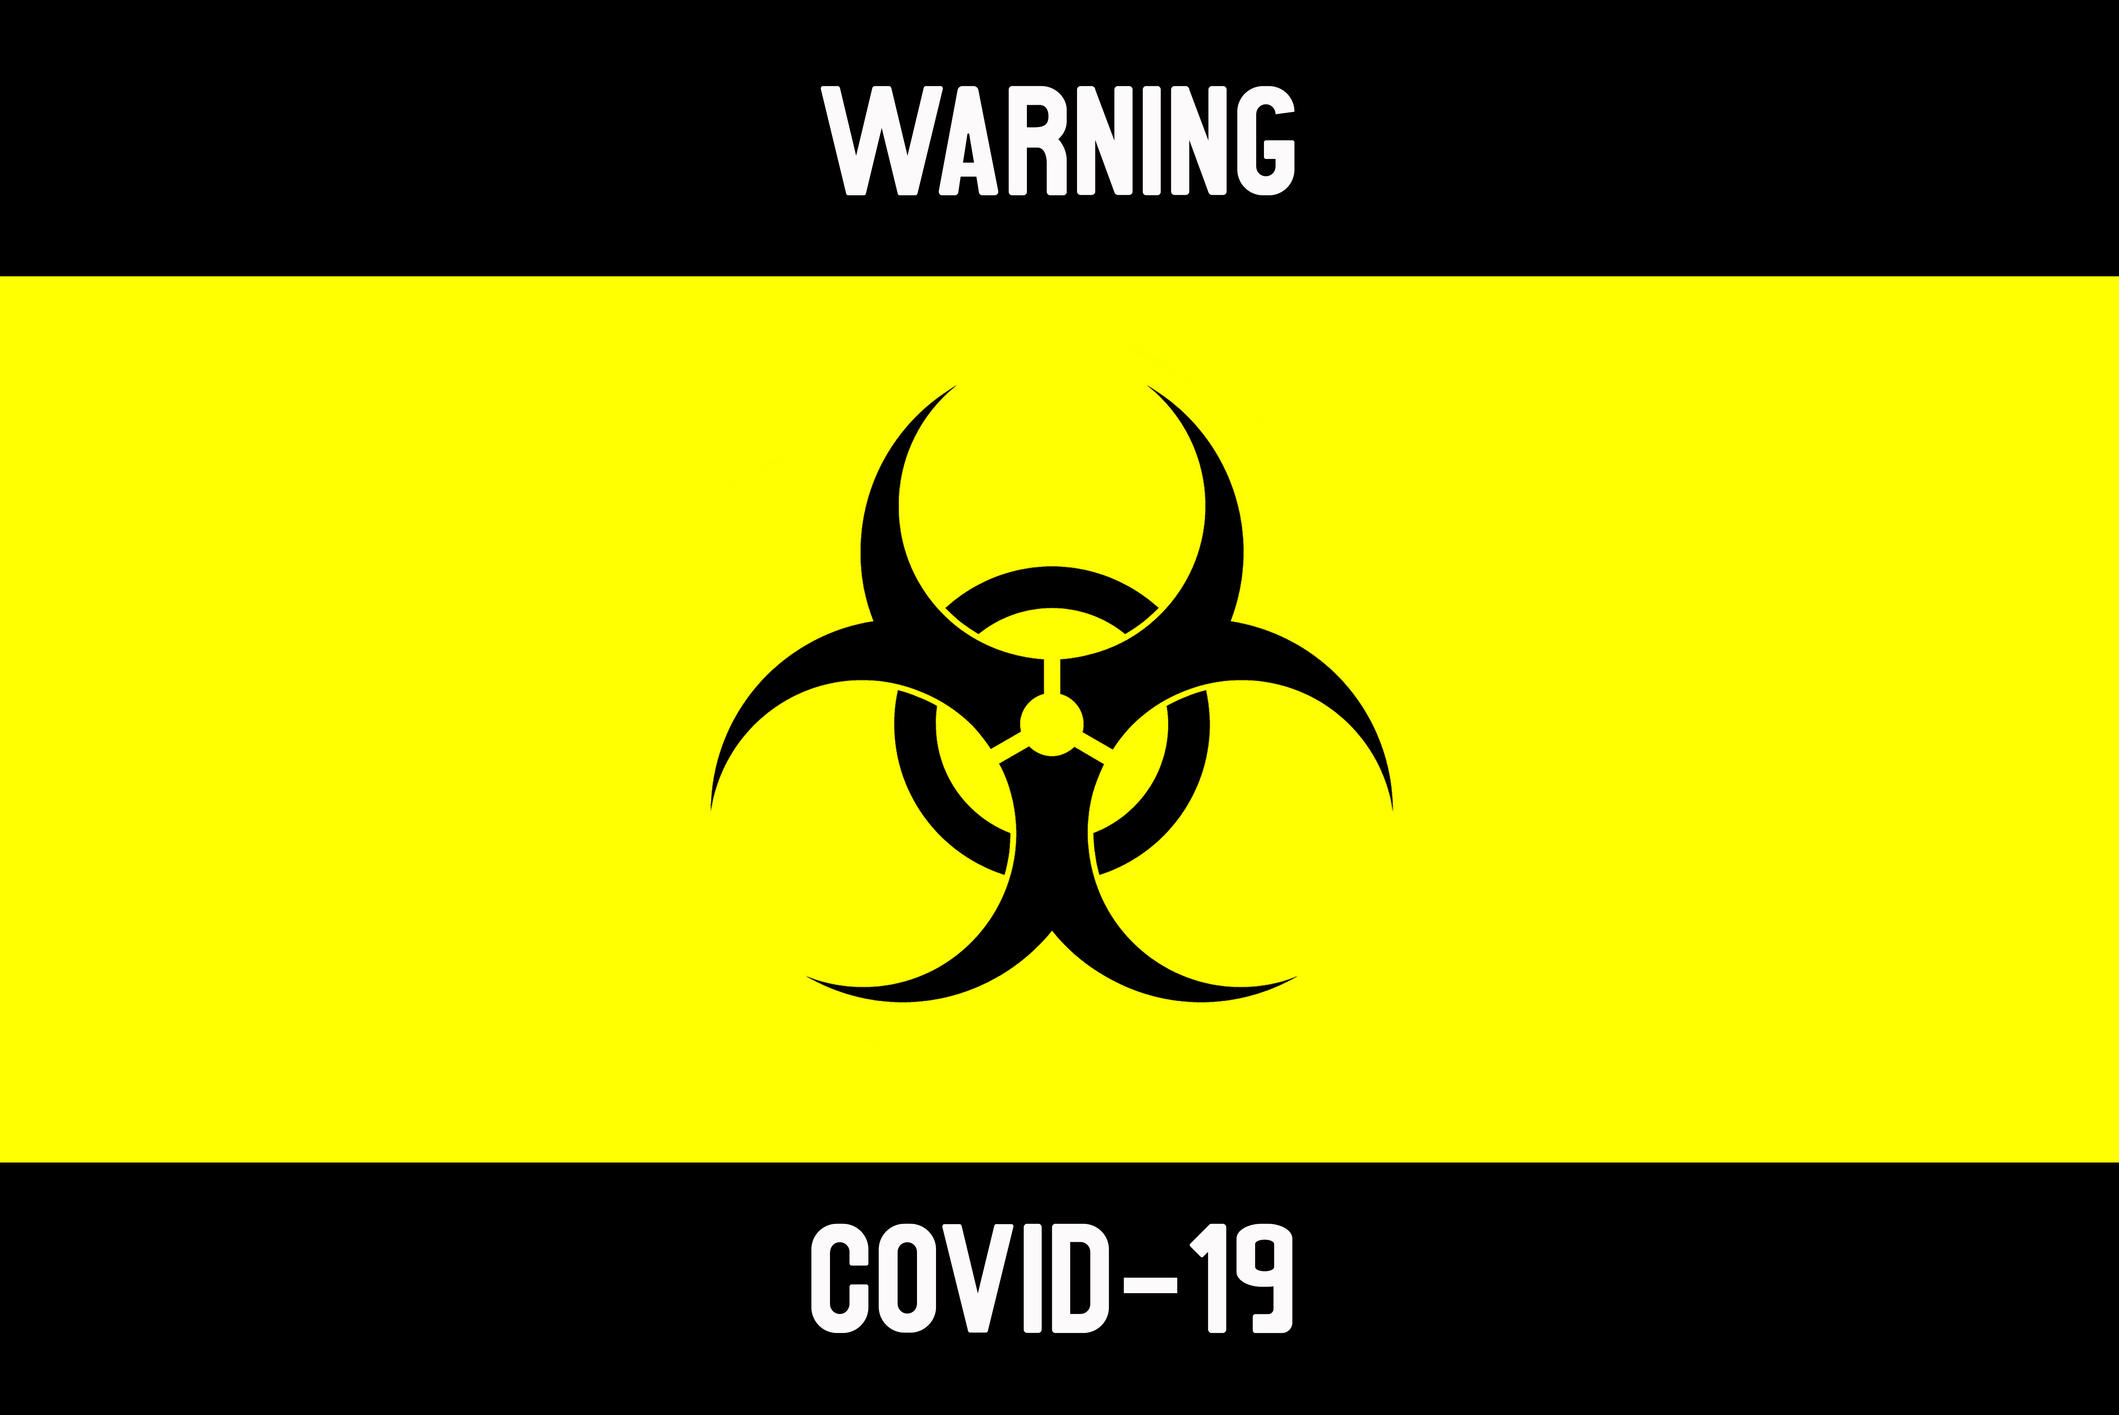 CORONAVIRUS WARNING SIGN